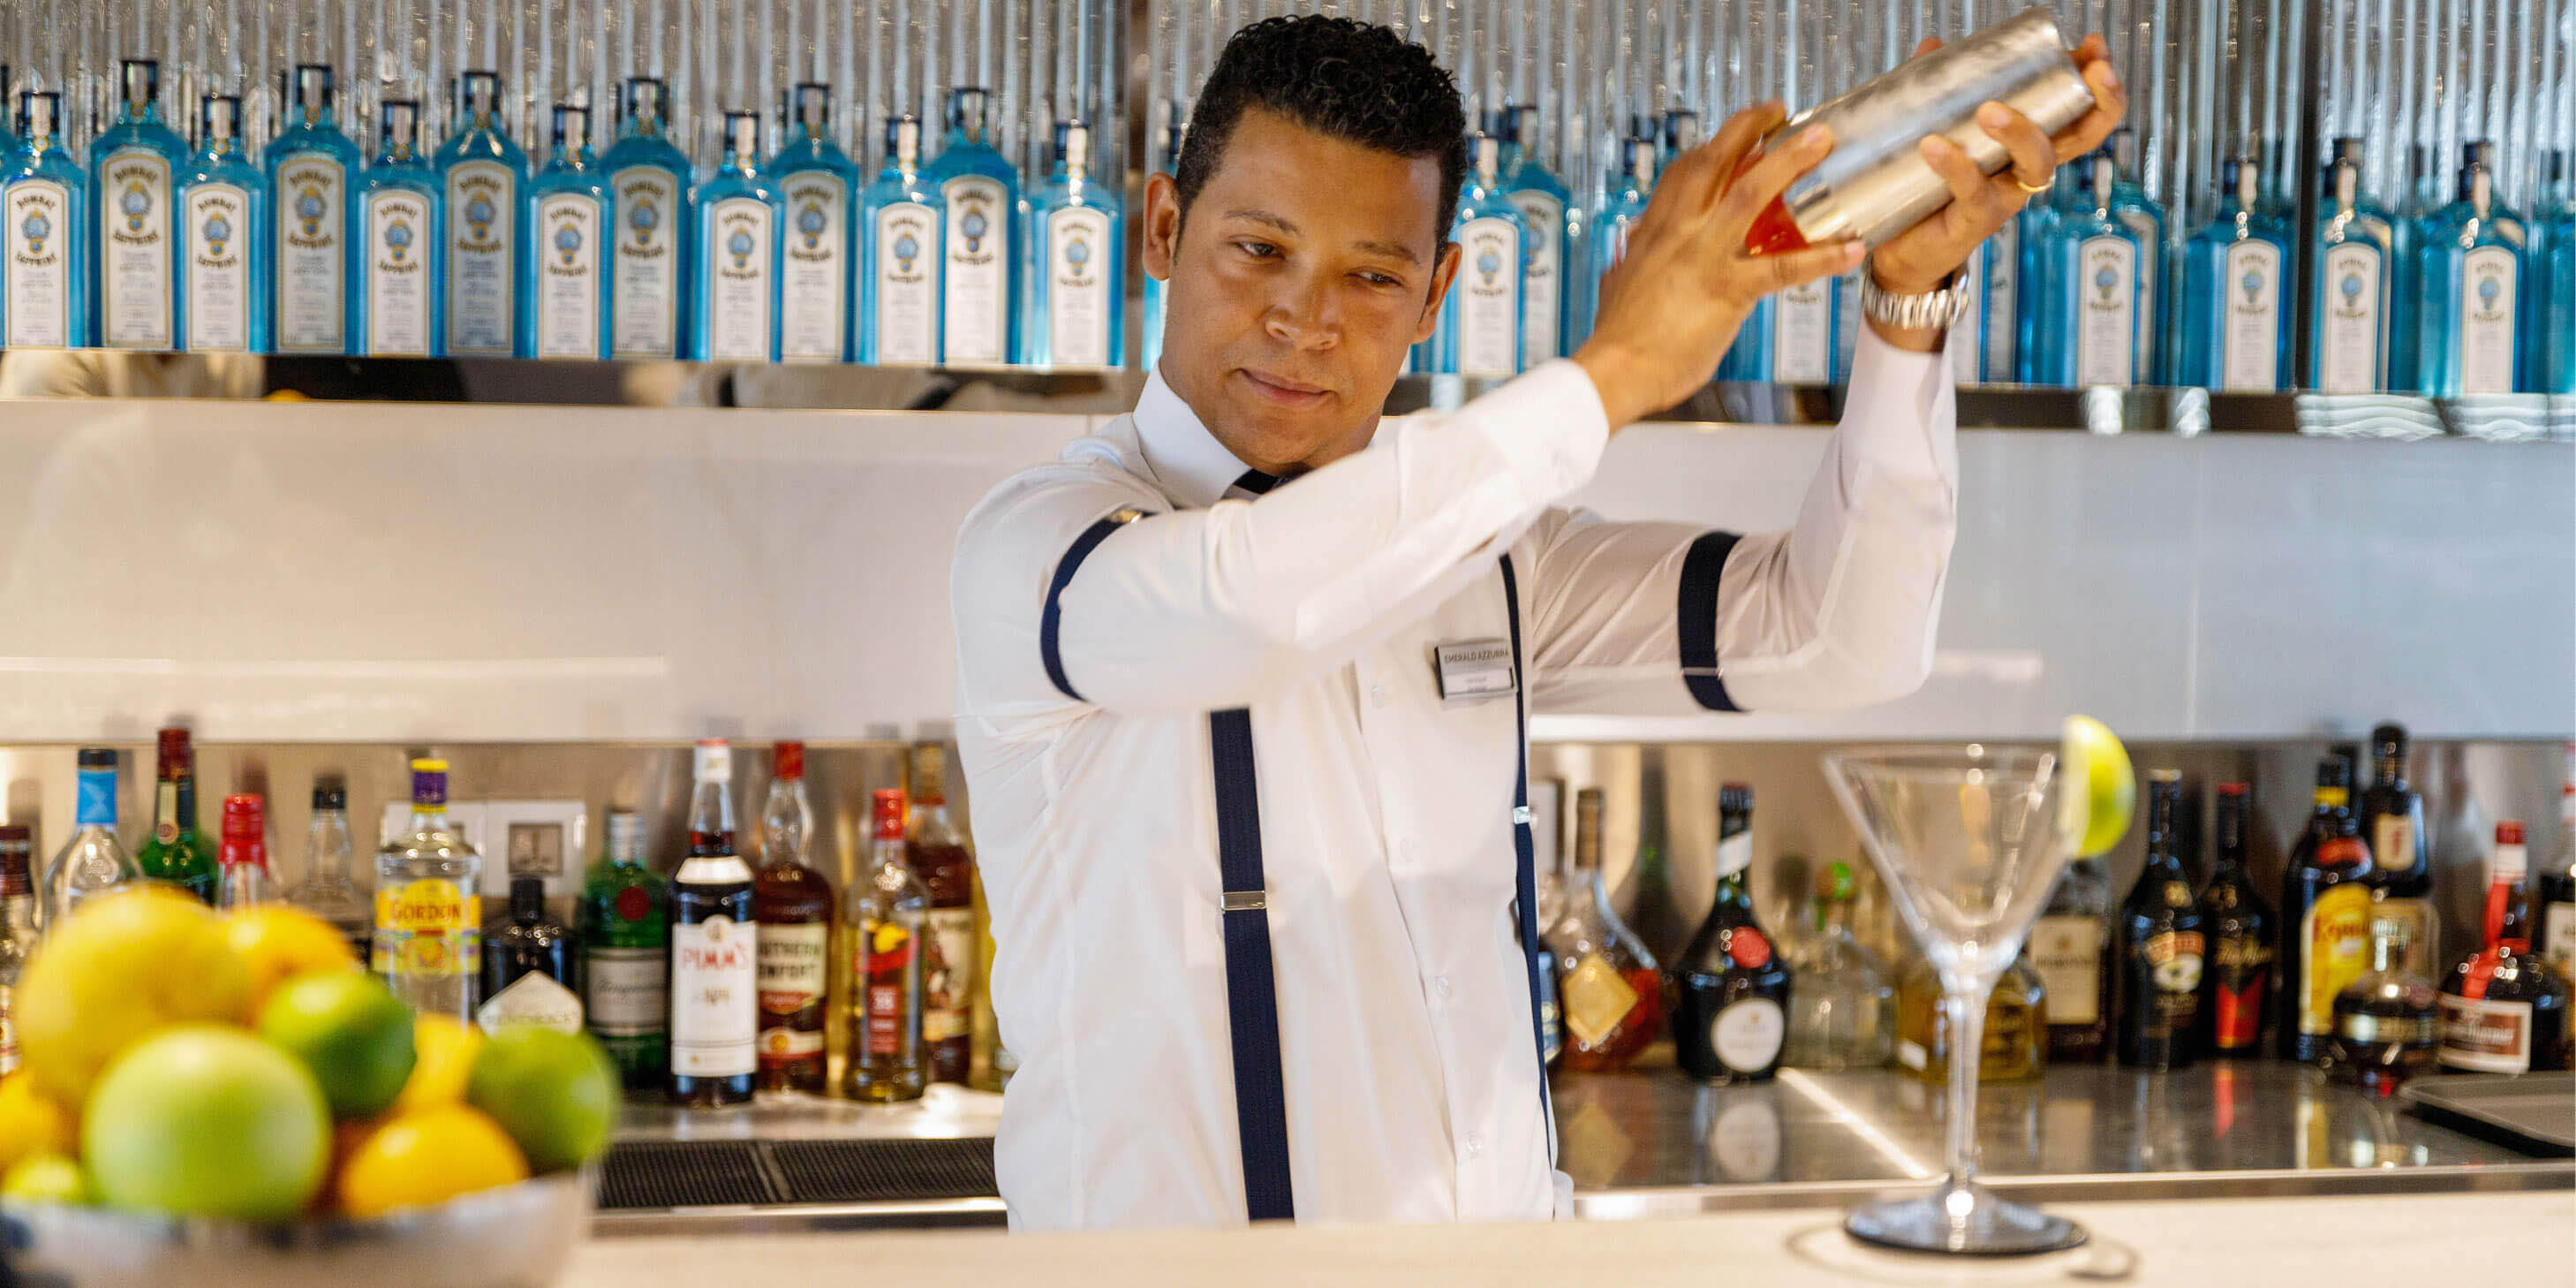 Bartender shaking a cocktail